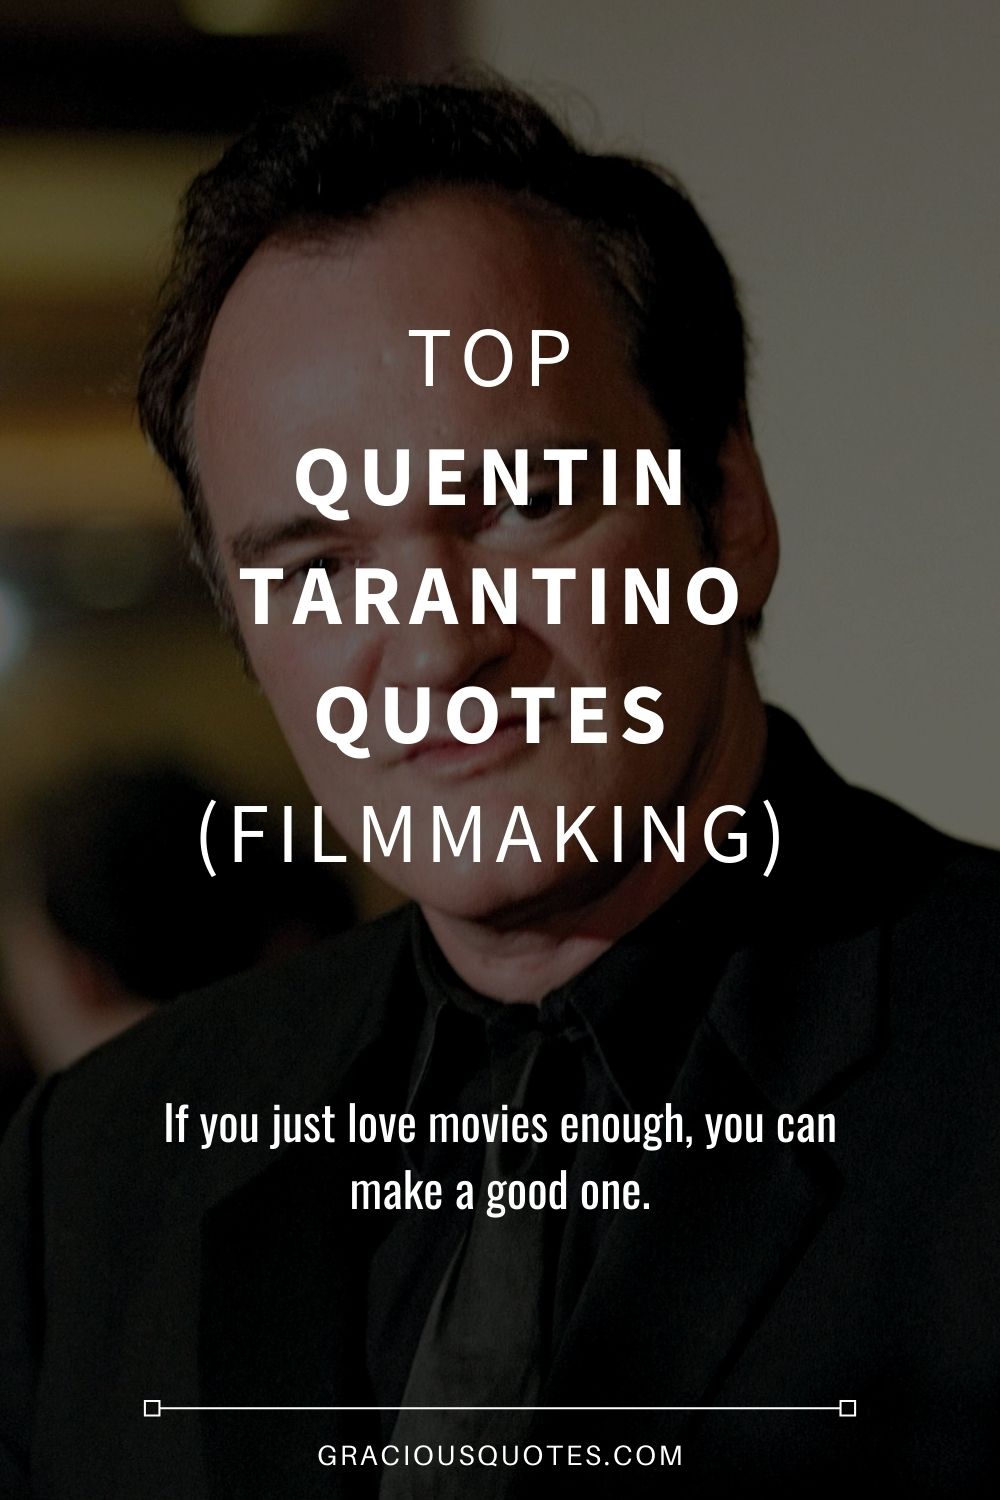 Top Quentin Tarantino Quotes (FILMMAKING) - Gracious Quotes